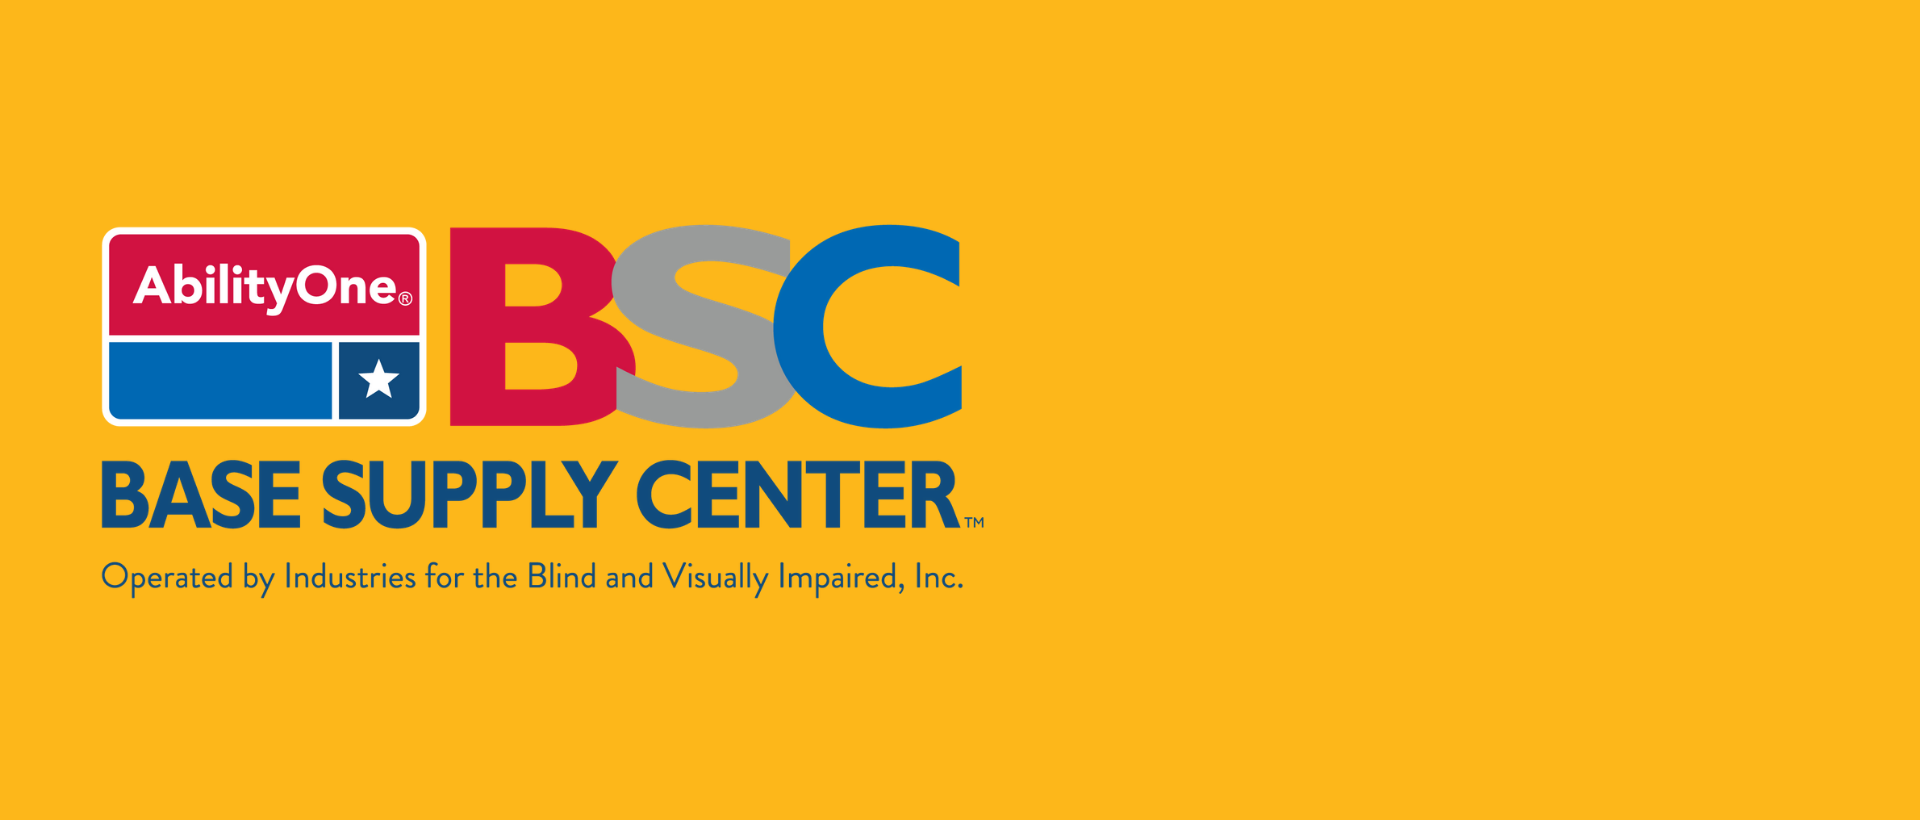 BSC Ability One logo